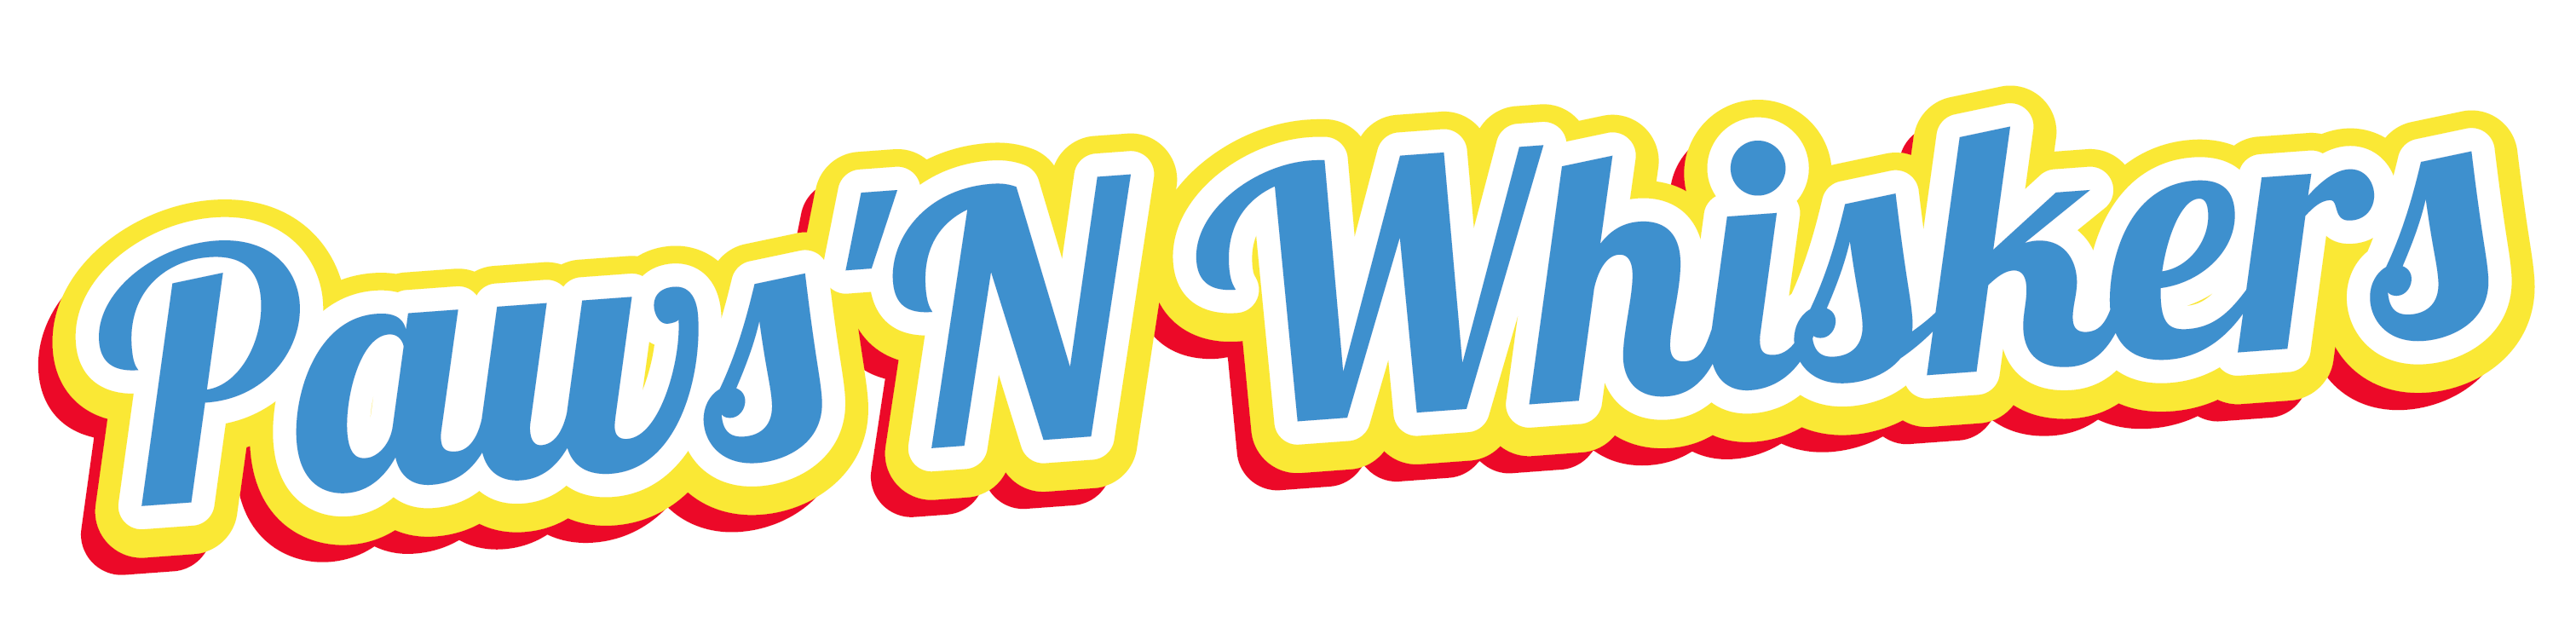 pawsn-whiskers-logo